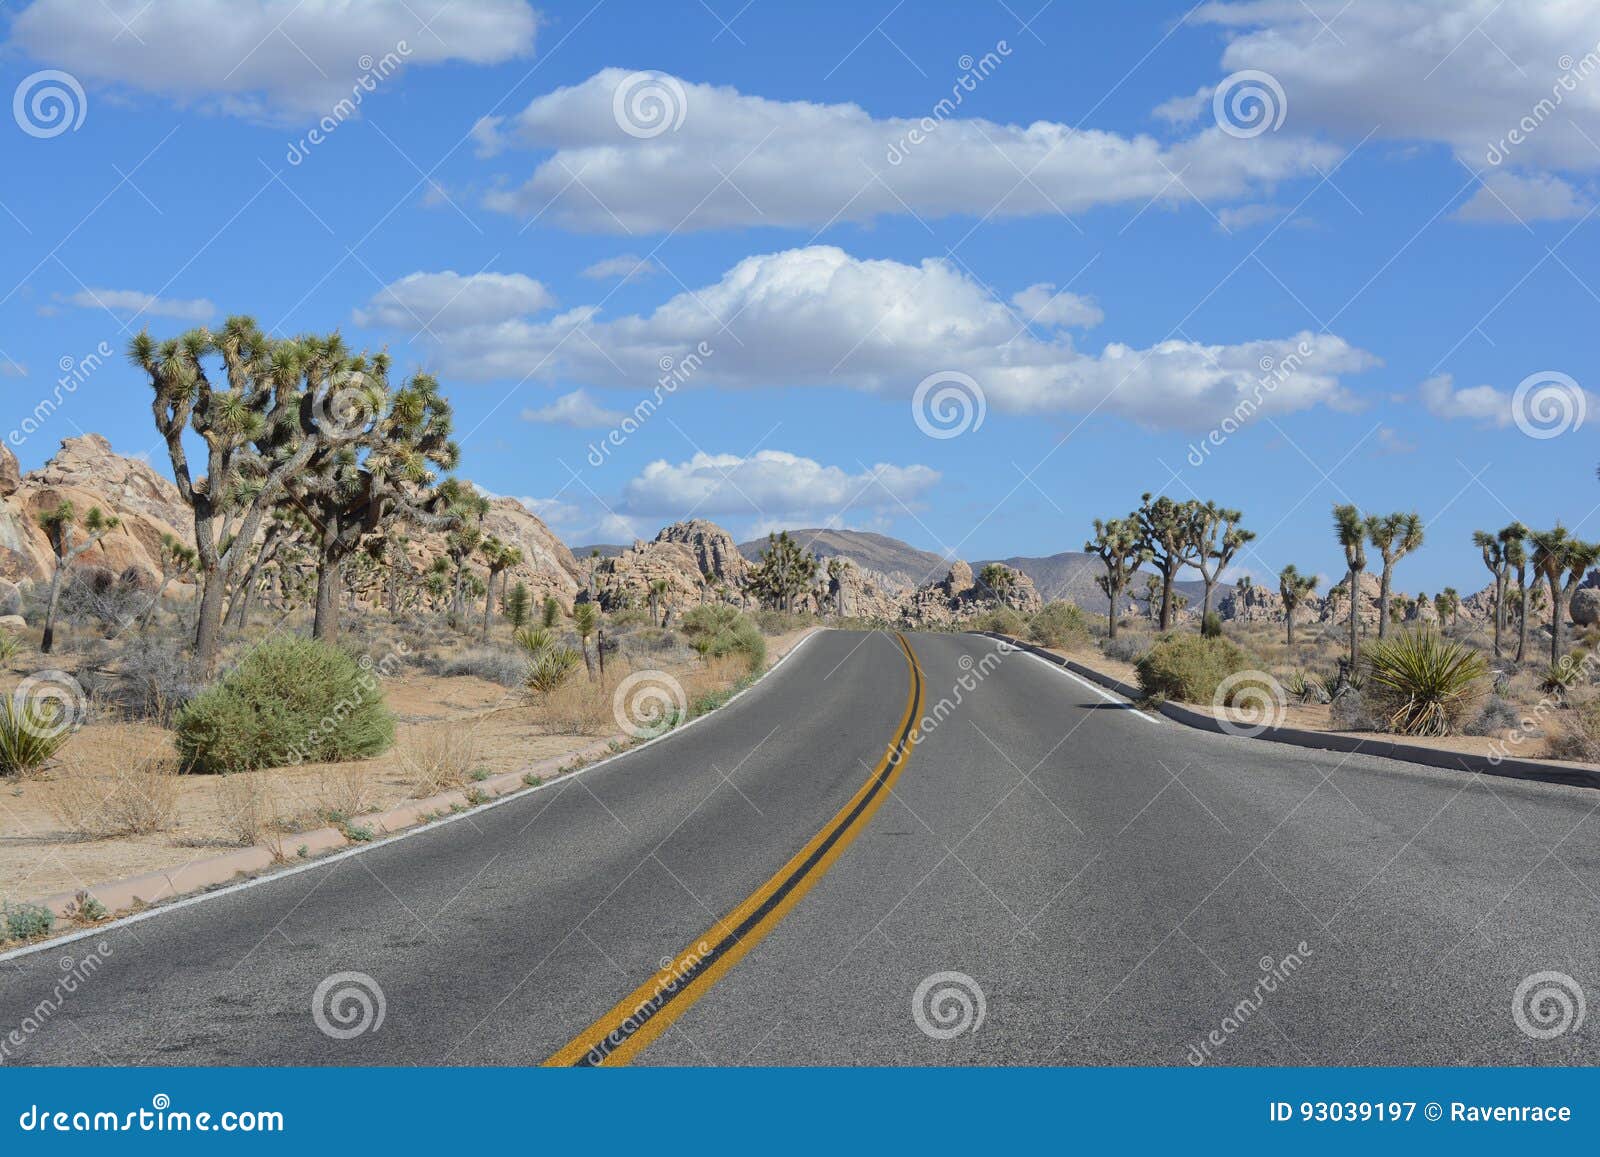 Joshua Tree National Park Desert California Stock Image Image Of